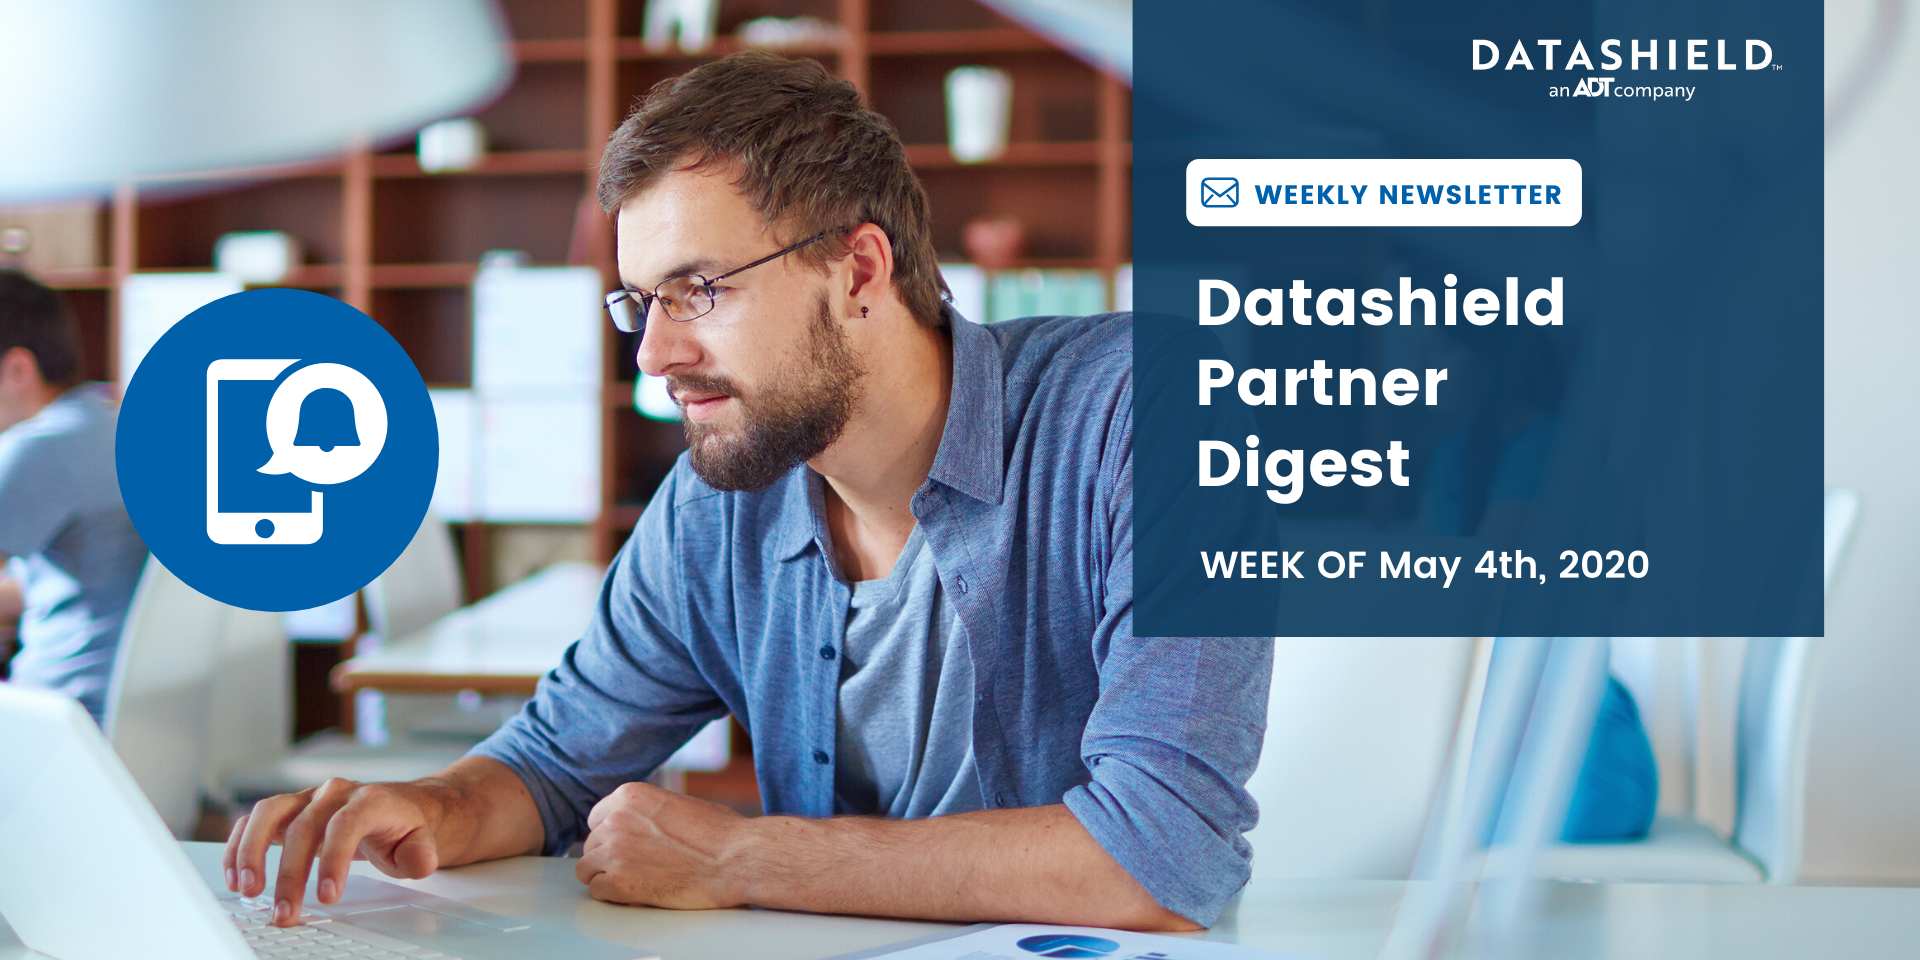 Datashield Partner Digest 5/4/20